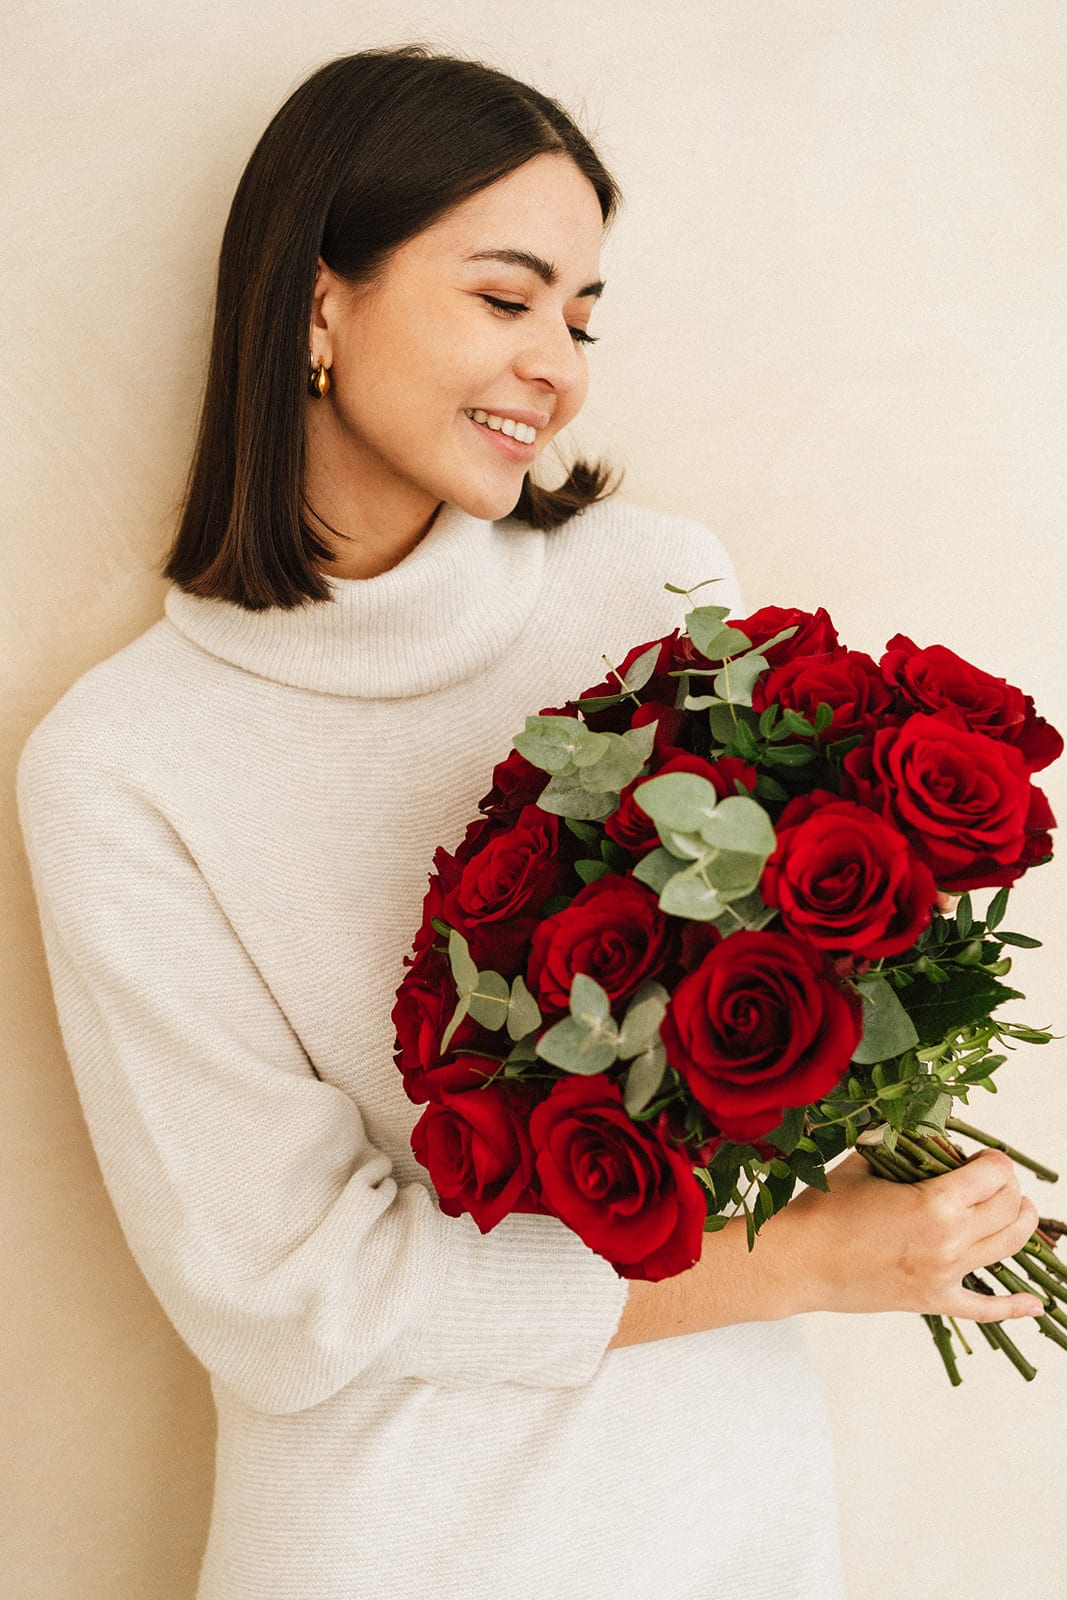 Kanel-florist-bouquet-florist-red-delivery-switzerland-Rosa